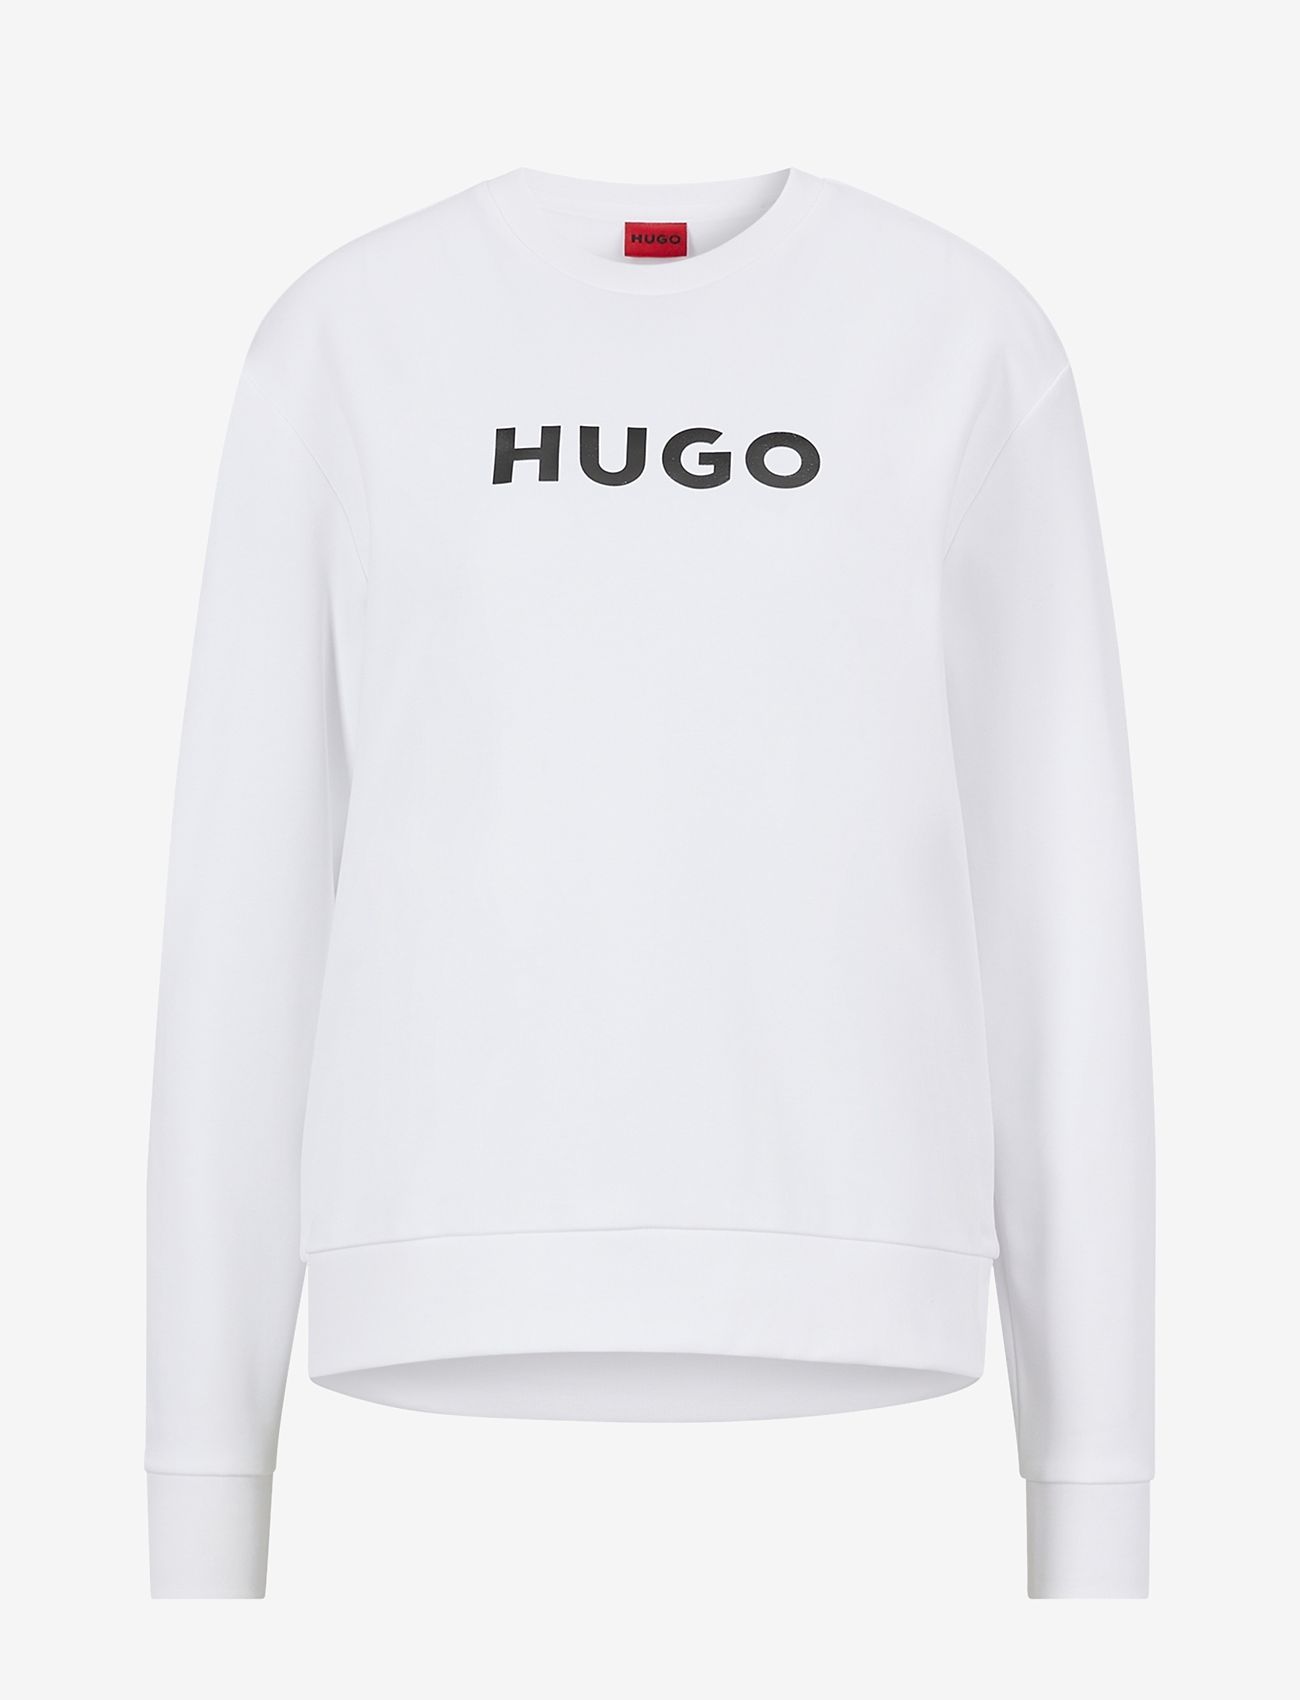 HUGO - The HUGO Sweater - women - white - 0